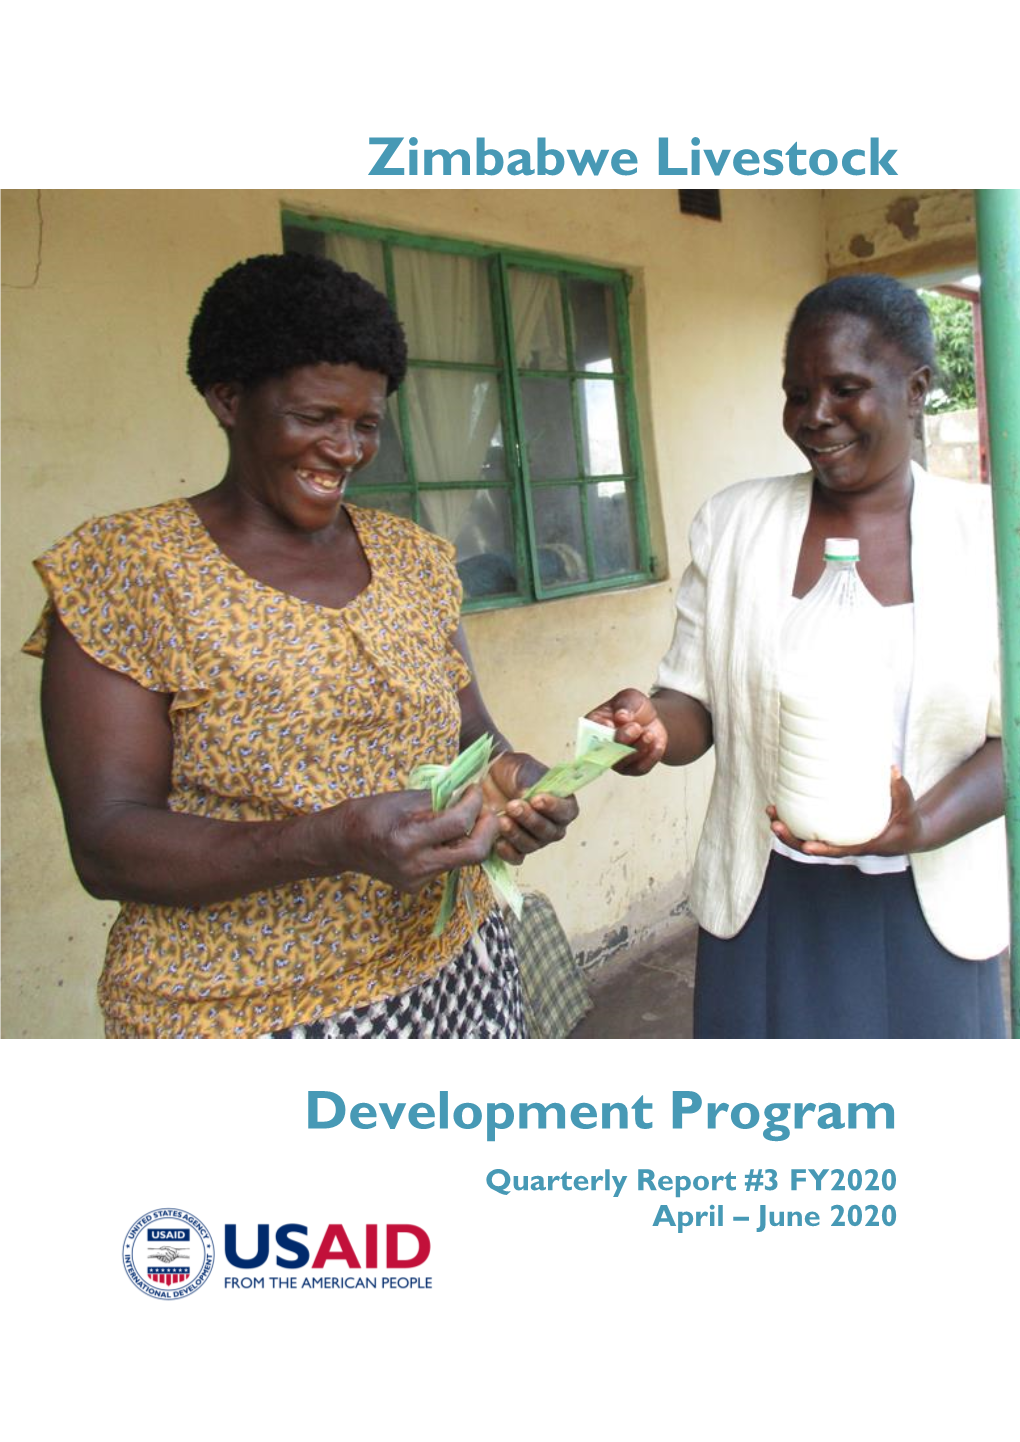 Zimbabwe Livestock Development Program | Quarterly Report #3 FY2020